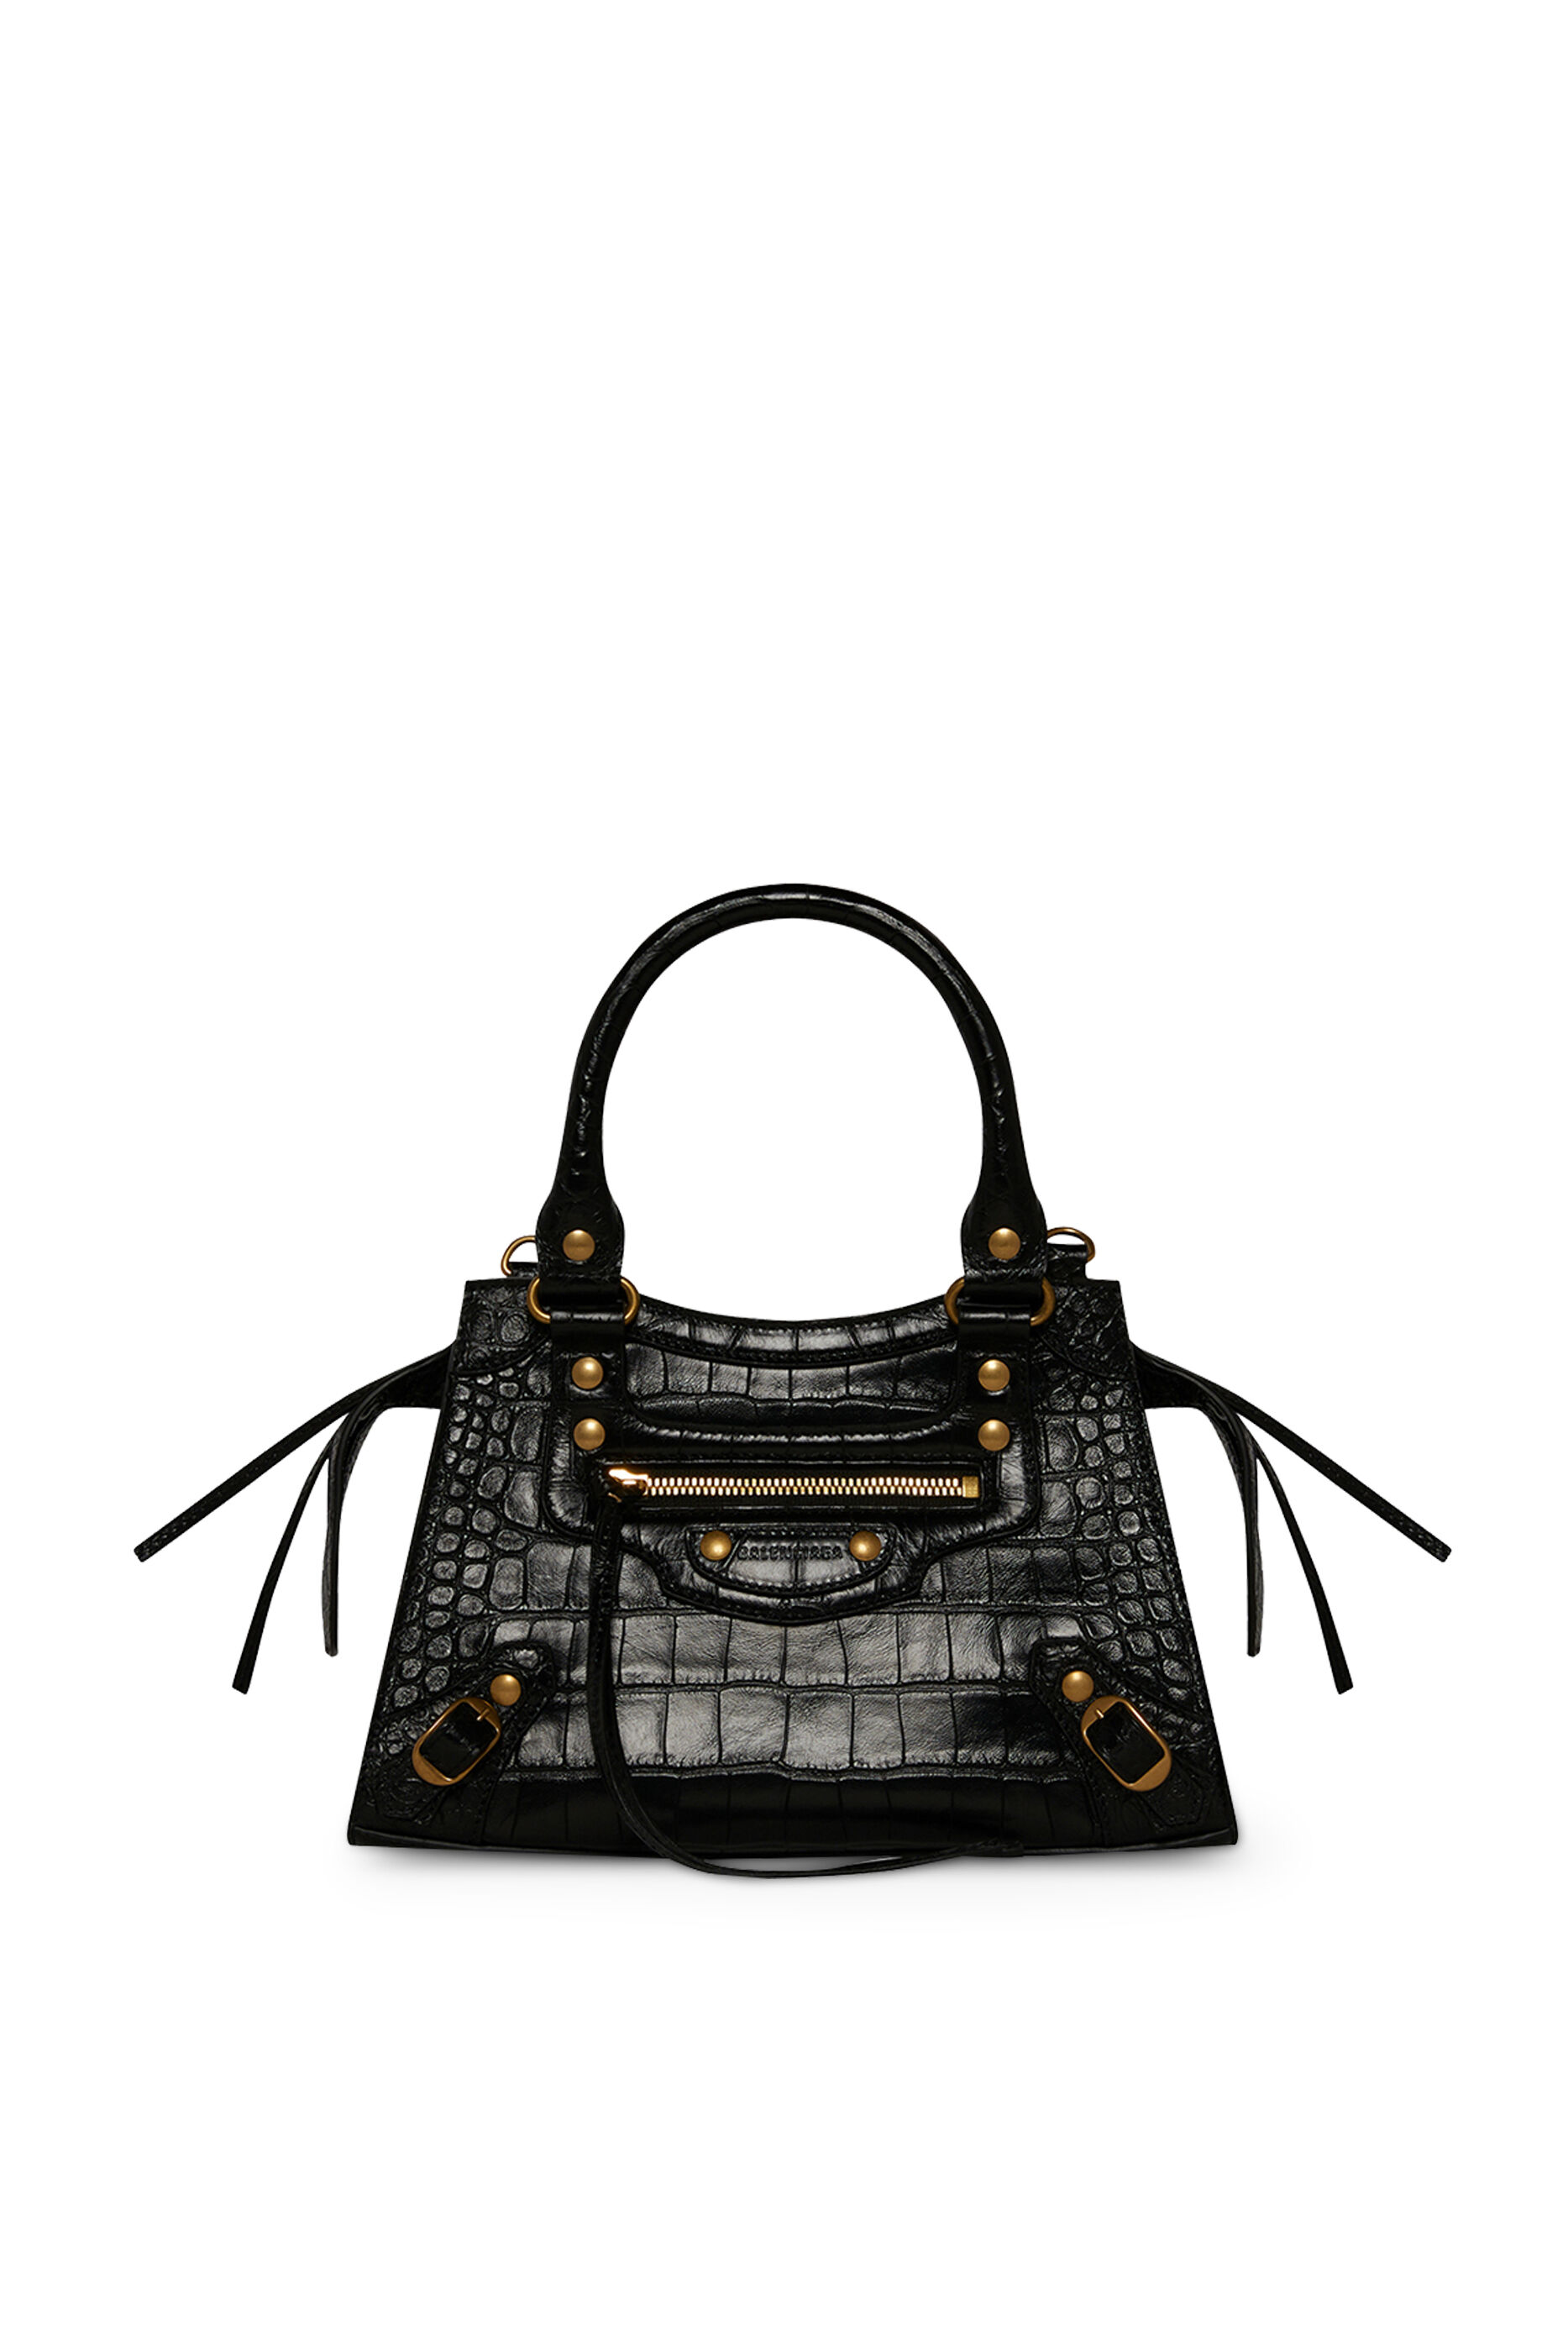 Balenciaga Neo Classic City Bag Leather Small Black  eBay